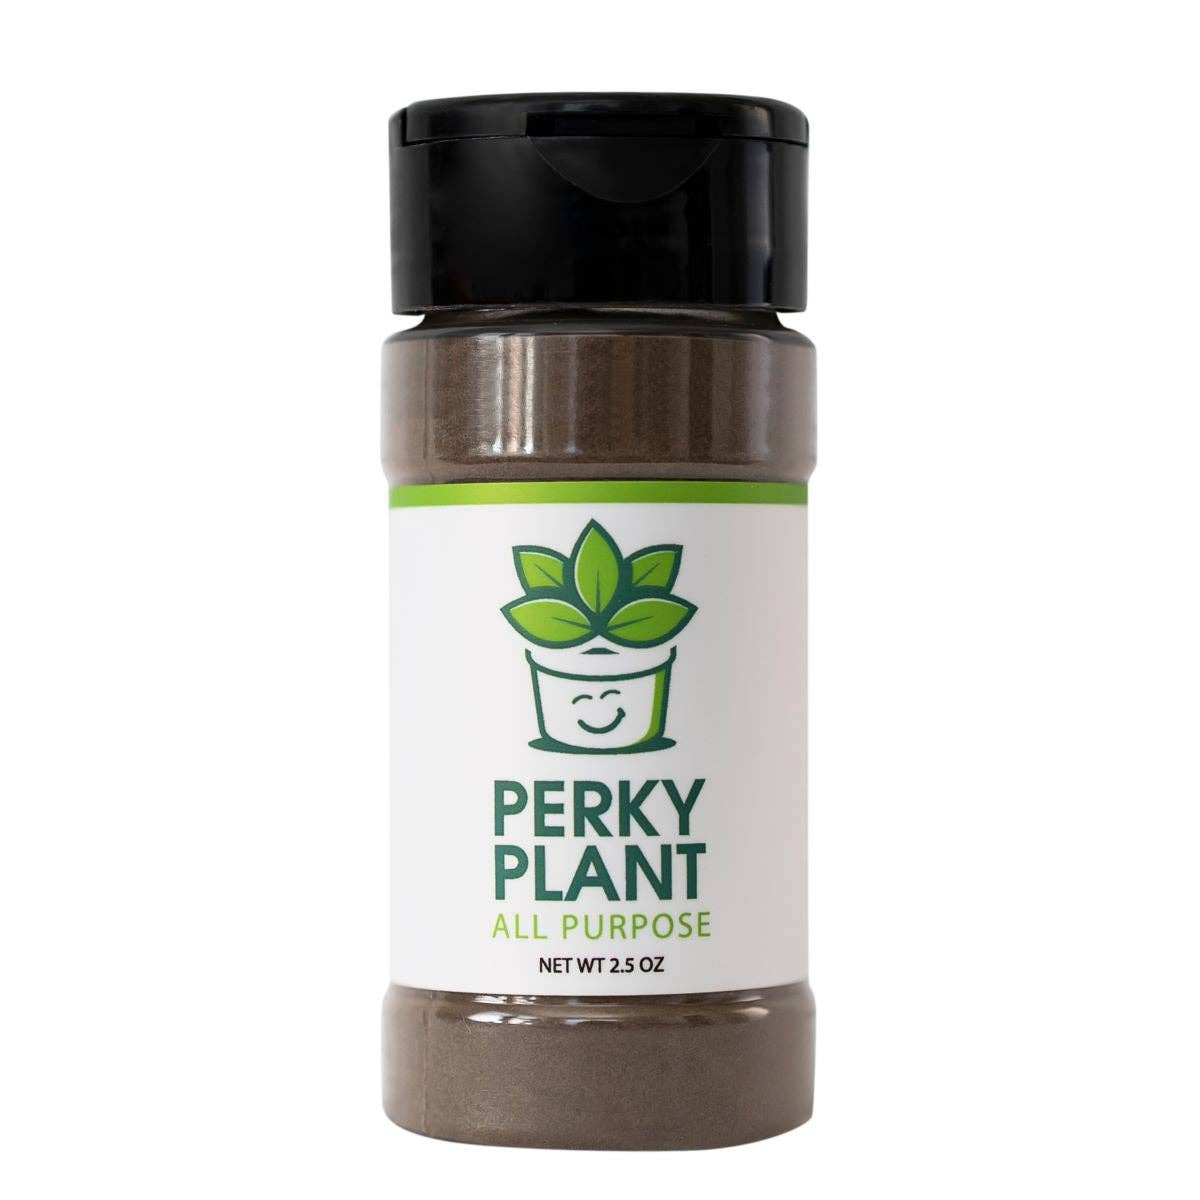 Perky Plant LLC - Perky Plant - Organic All Purpose Plant Food Fertilizer - 2.5 oz